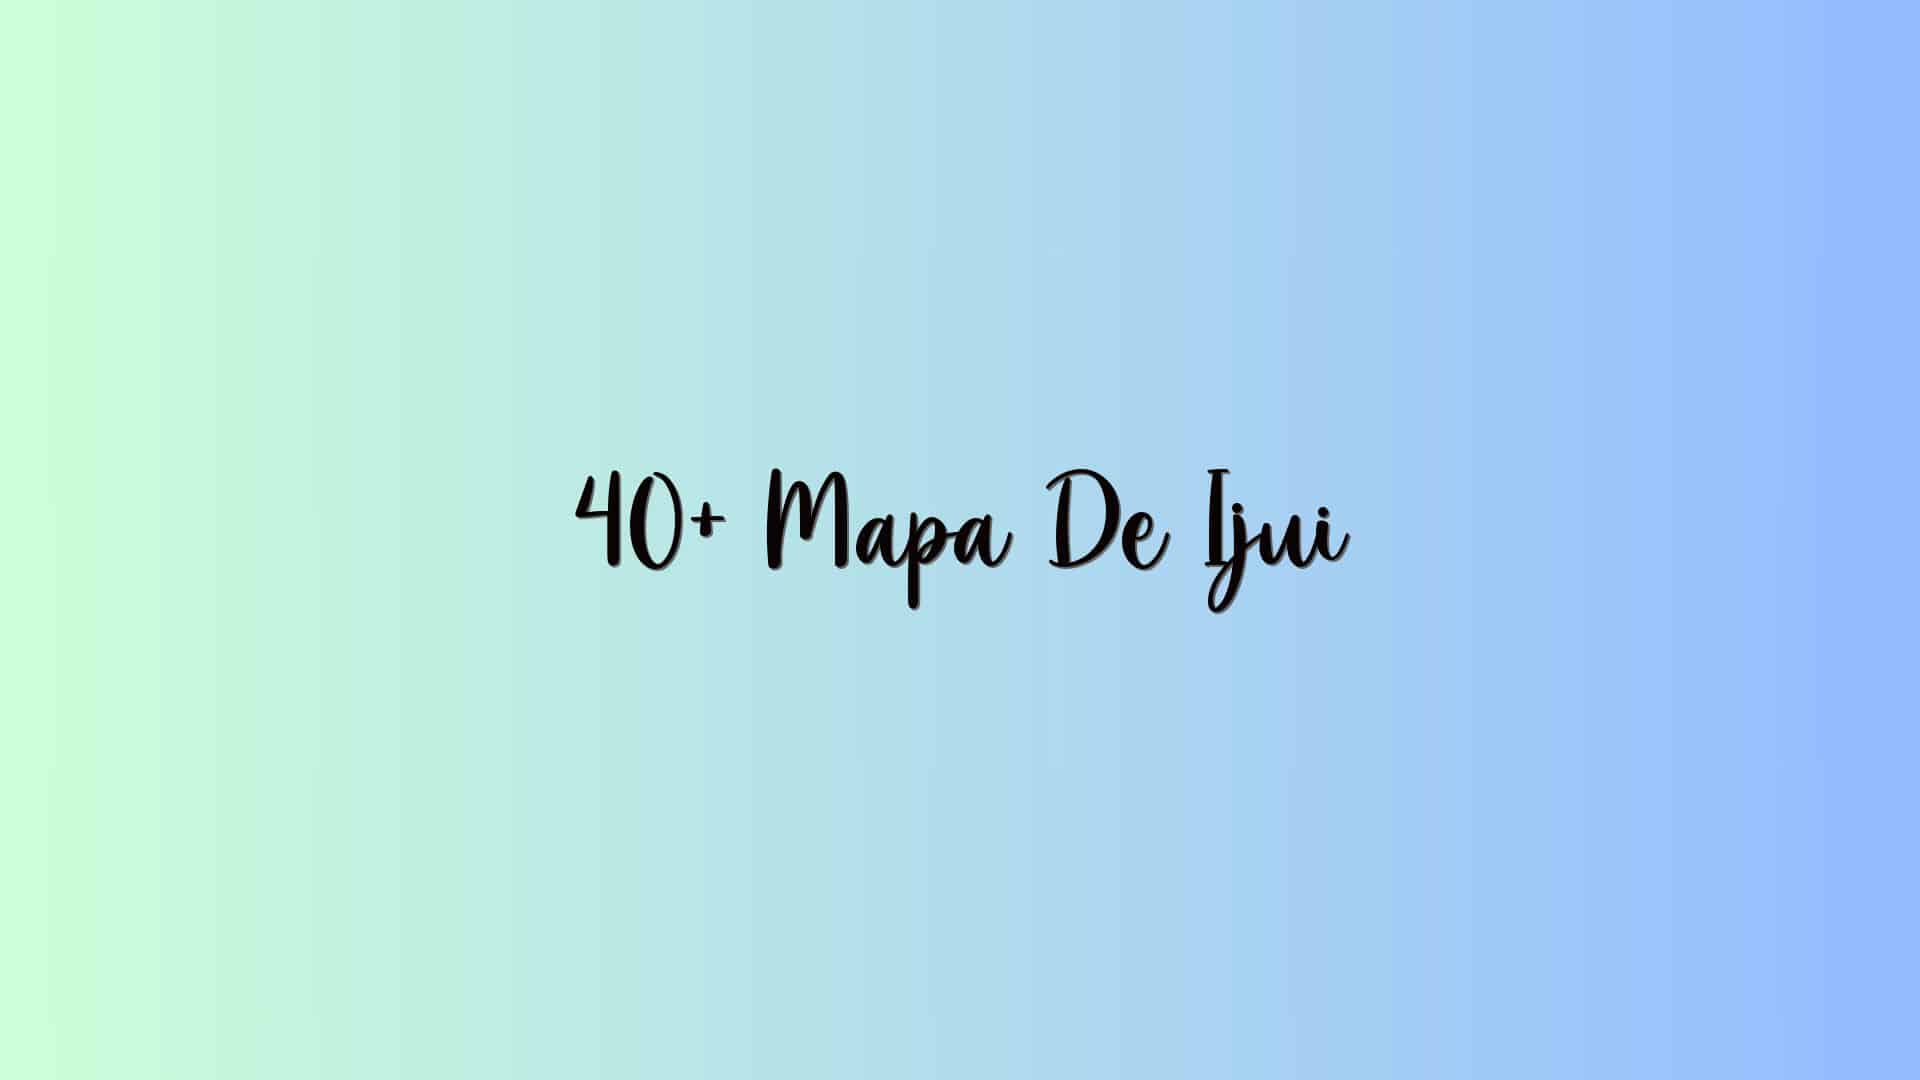 40+ Mapa De Ijui